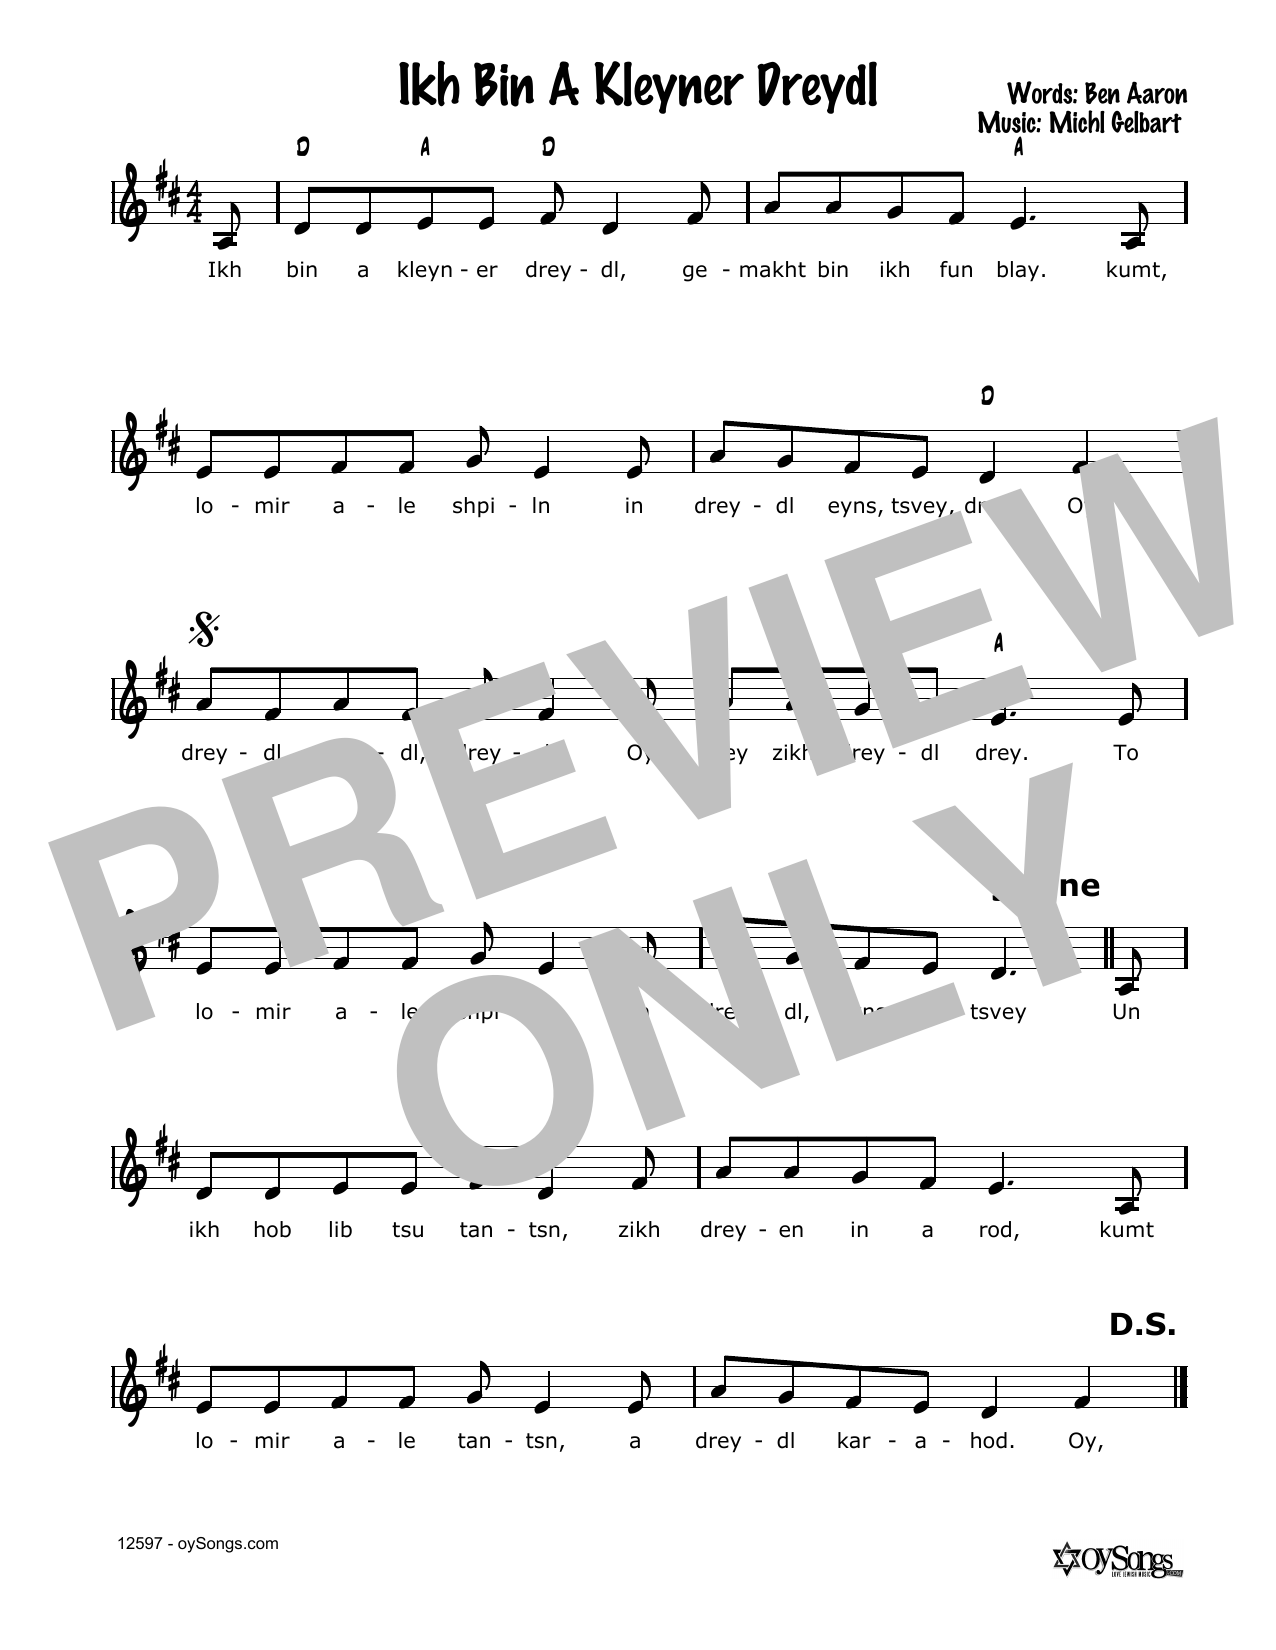 Cindy Paley Ikh Bin A Kleyner Dreydl Sheet Music Notes & Chords for Melody Line, Lyrics & Chords - Download or Print PDF